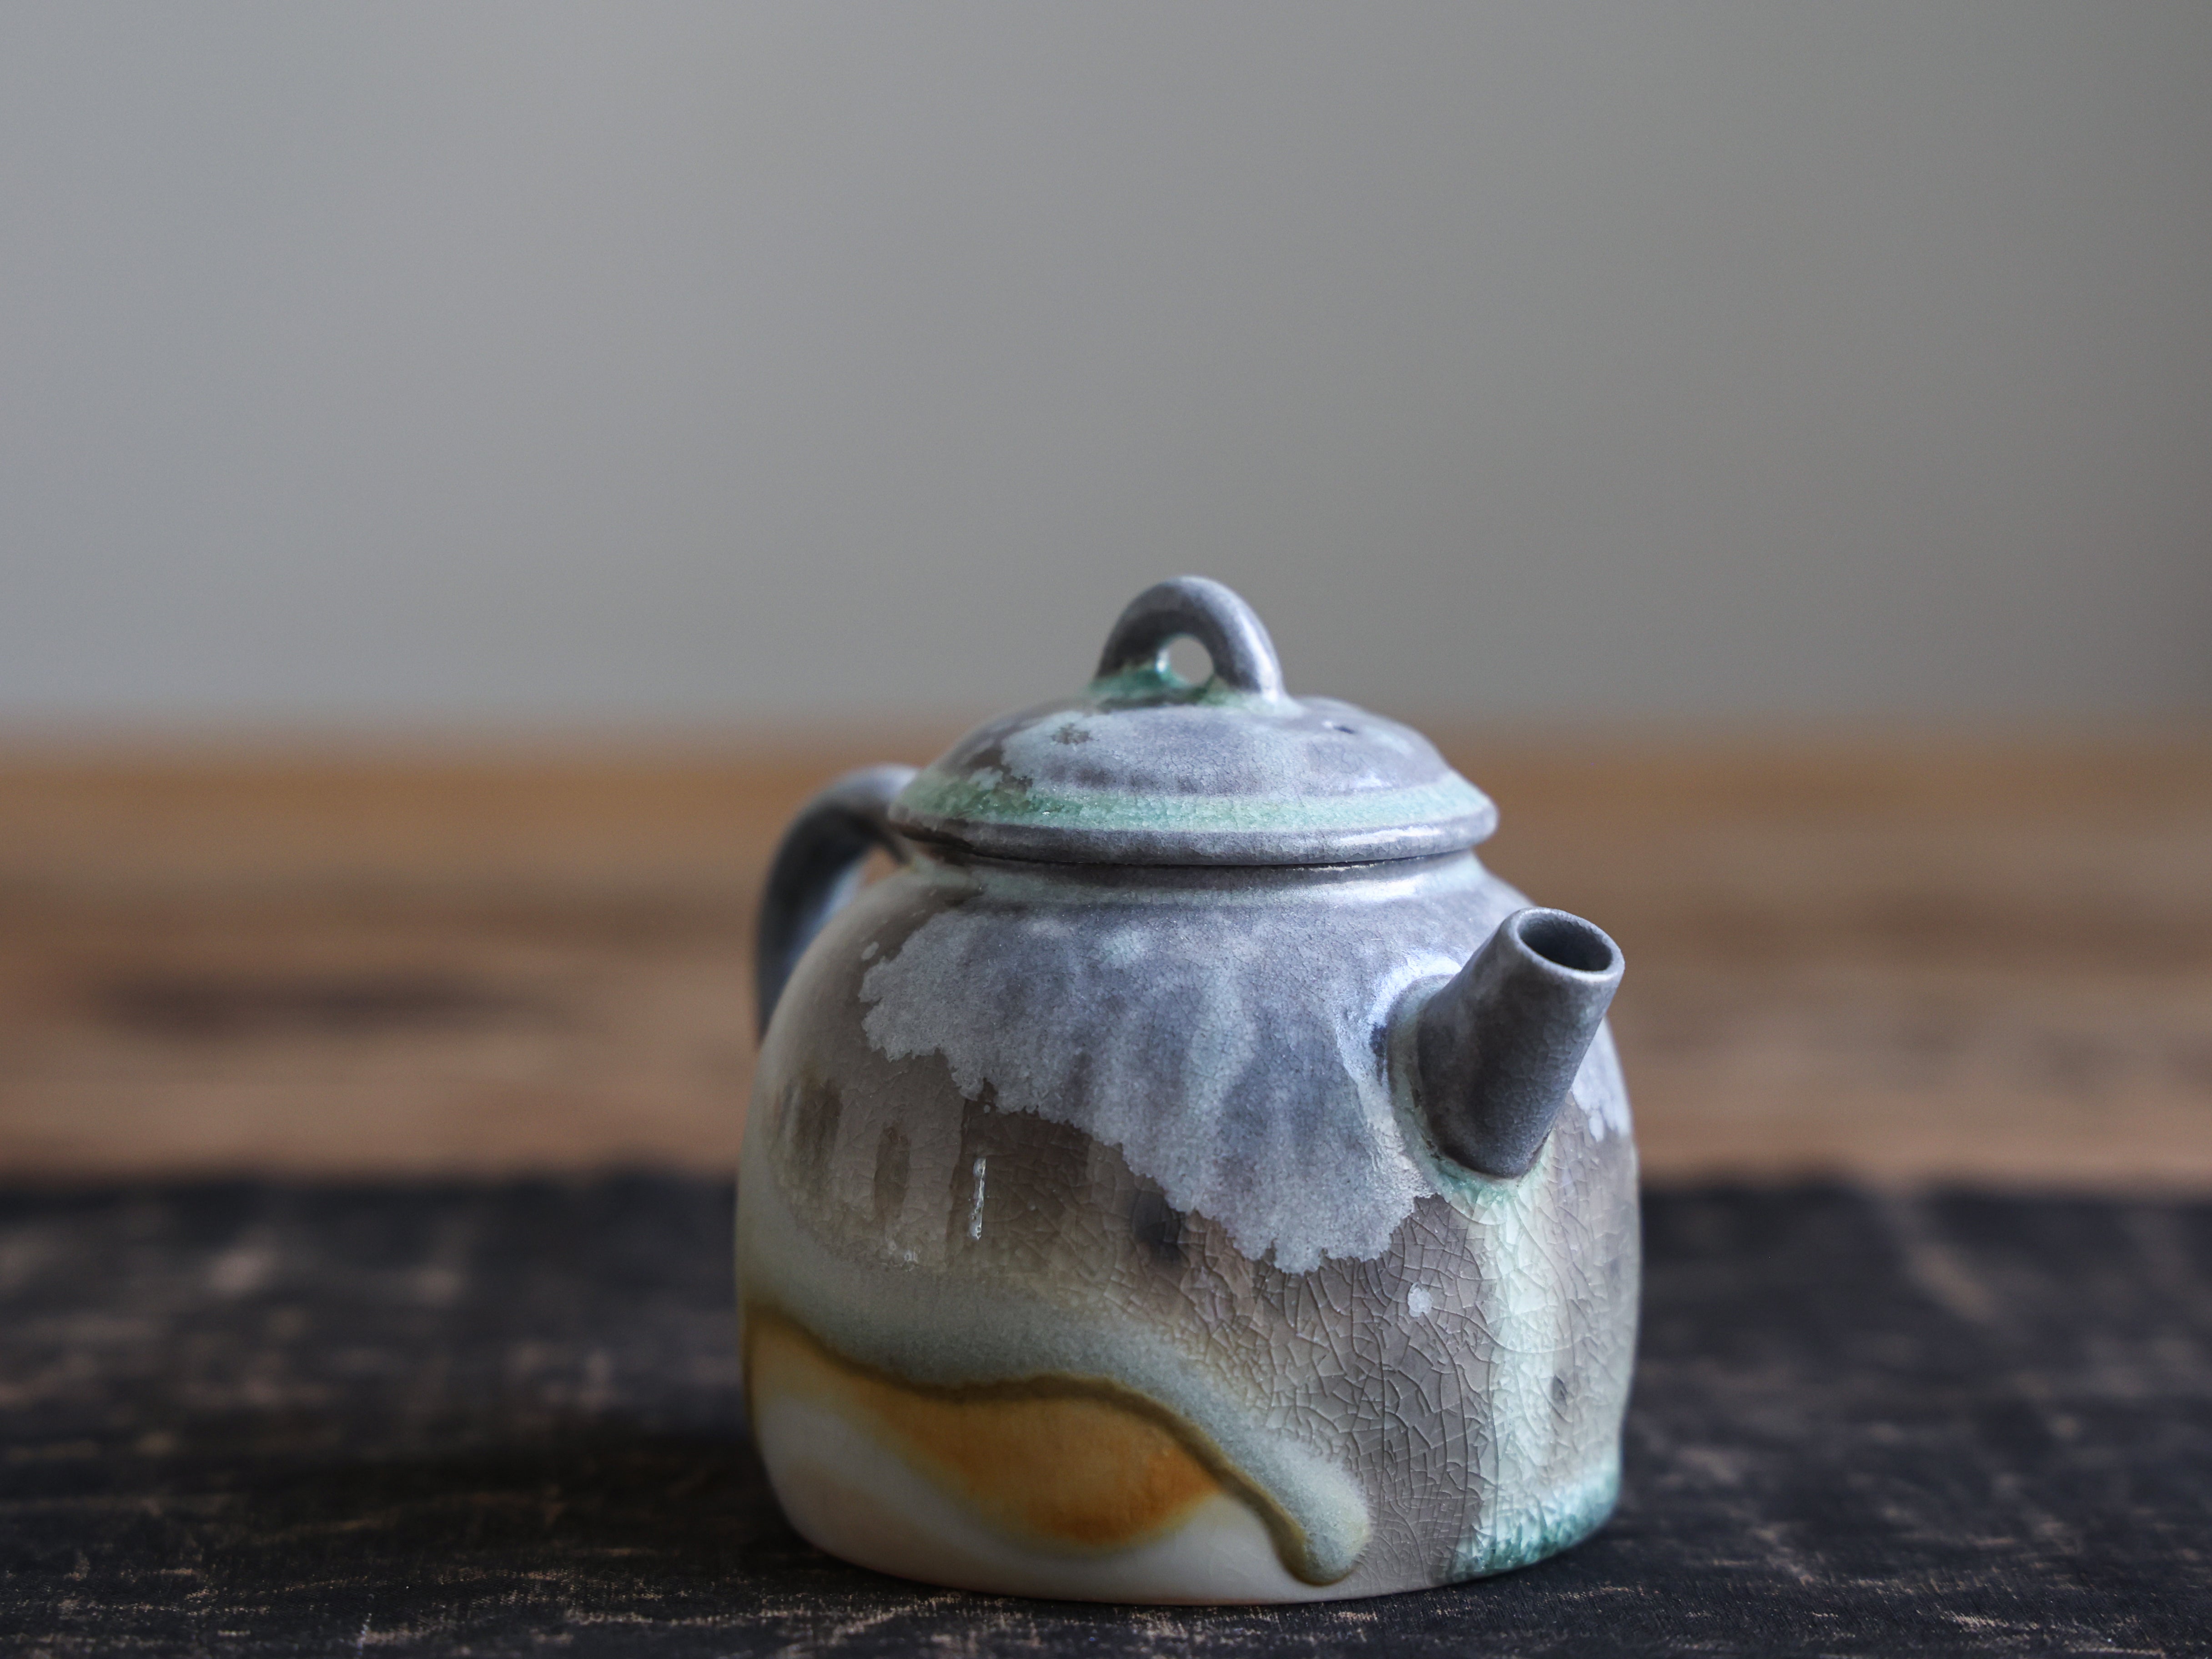 Frozen Woodfired Teapot